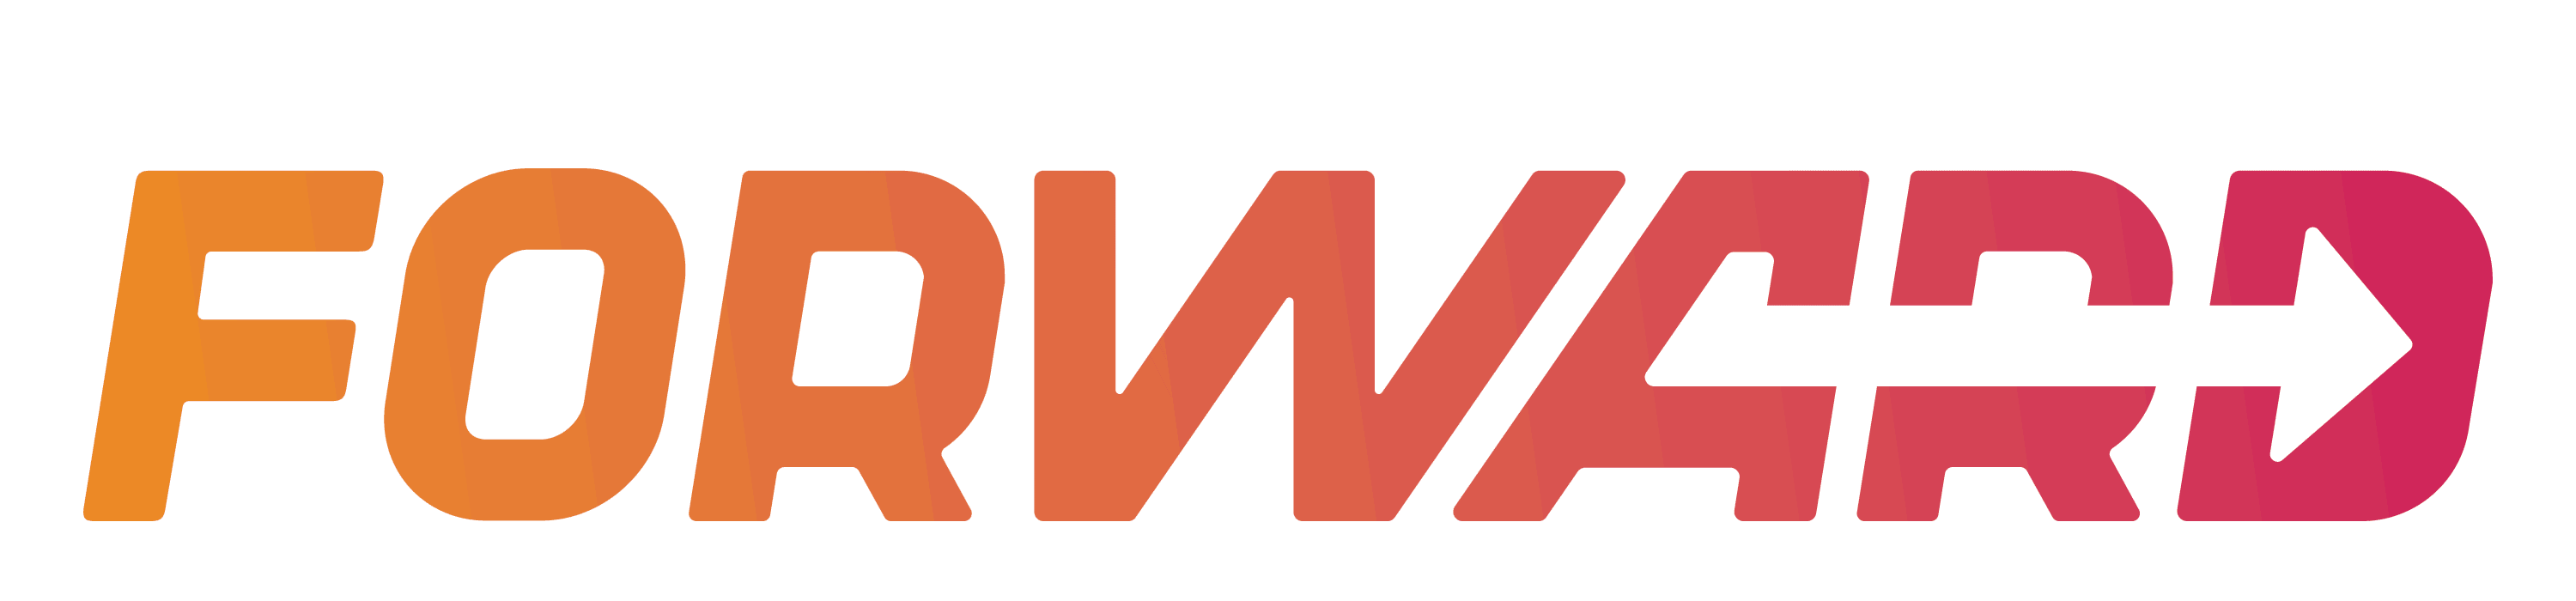 Forward series logo